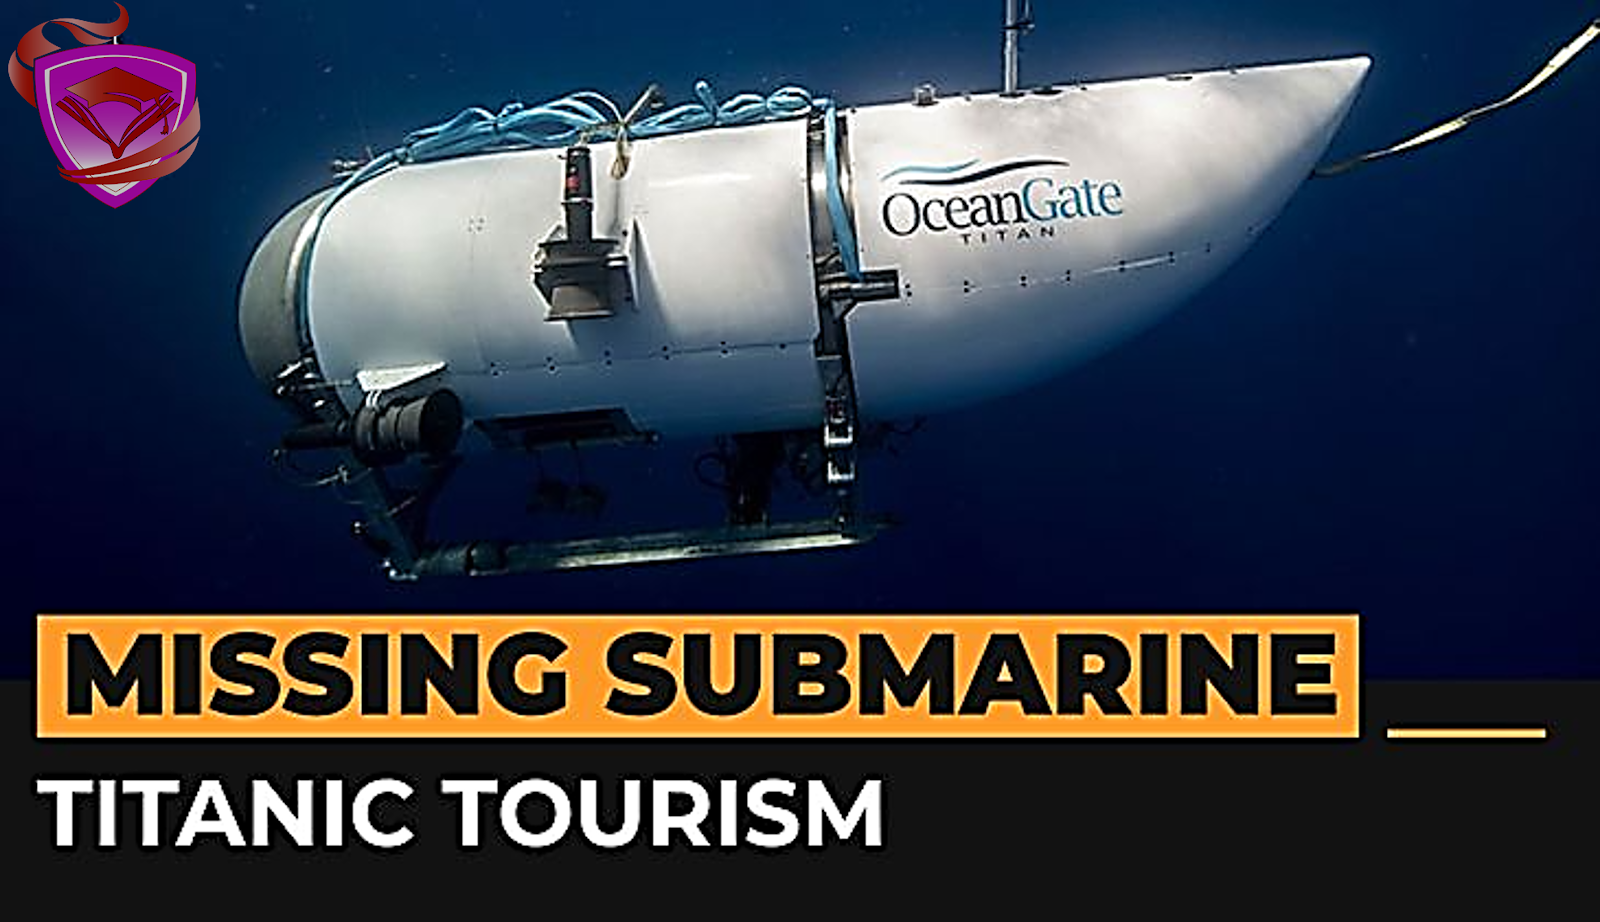 OceanGate's Titan submersible was lost in the Atlantic Ocean, Killing All Five People on Board